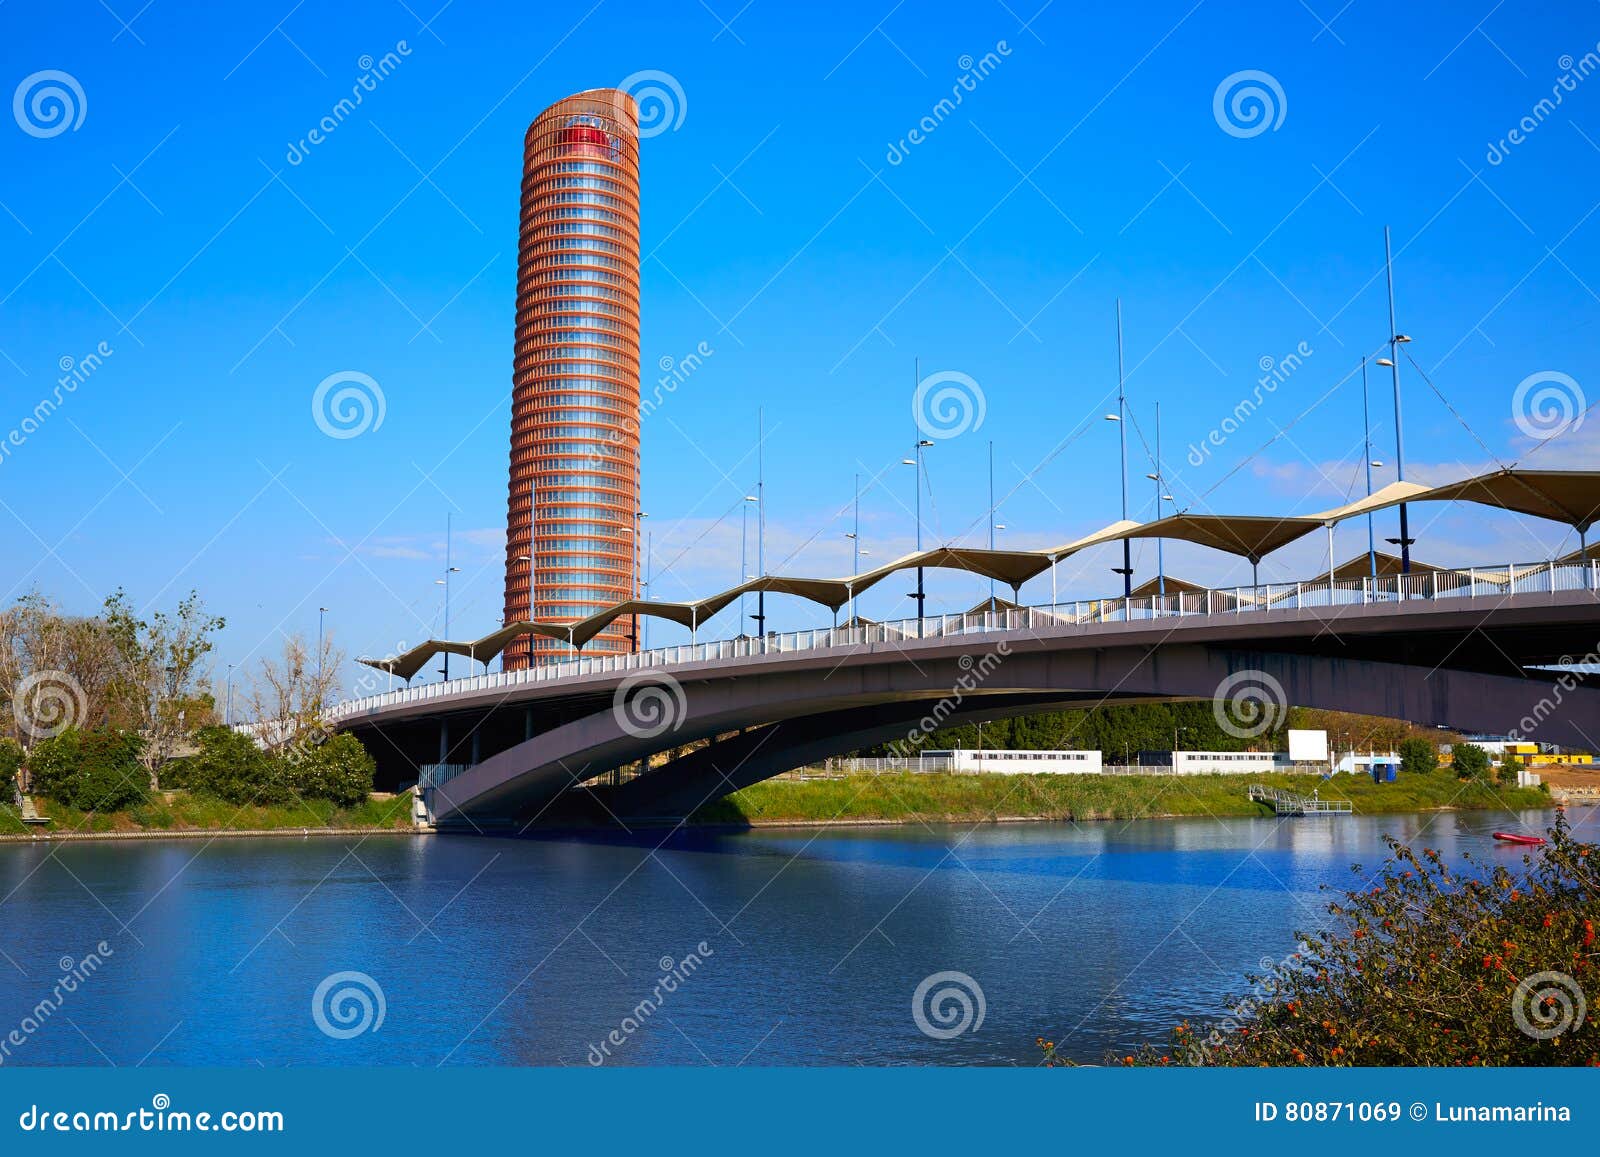 torre de sevilla and puente cachorro seville